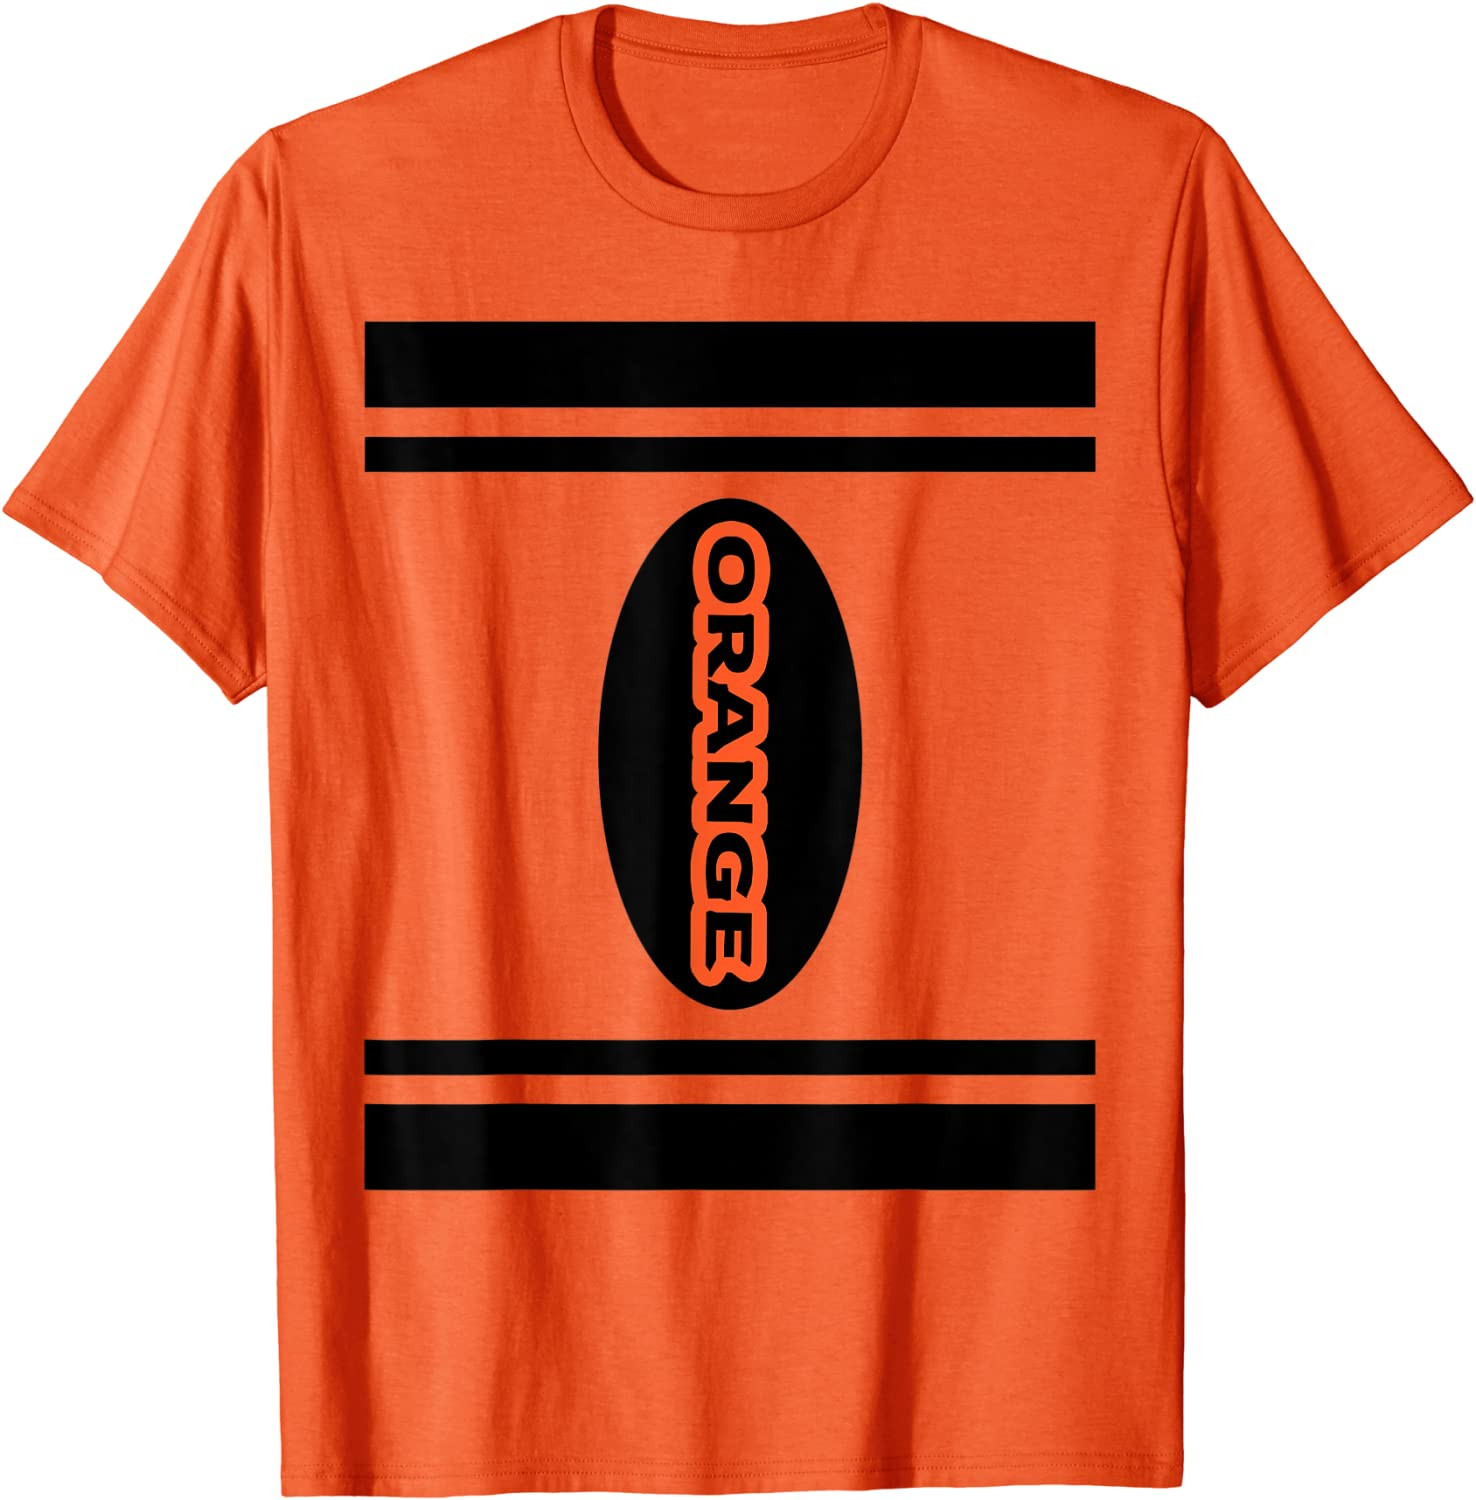 Orange Crayon Halloween Costume T-Shirt